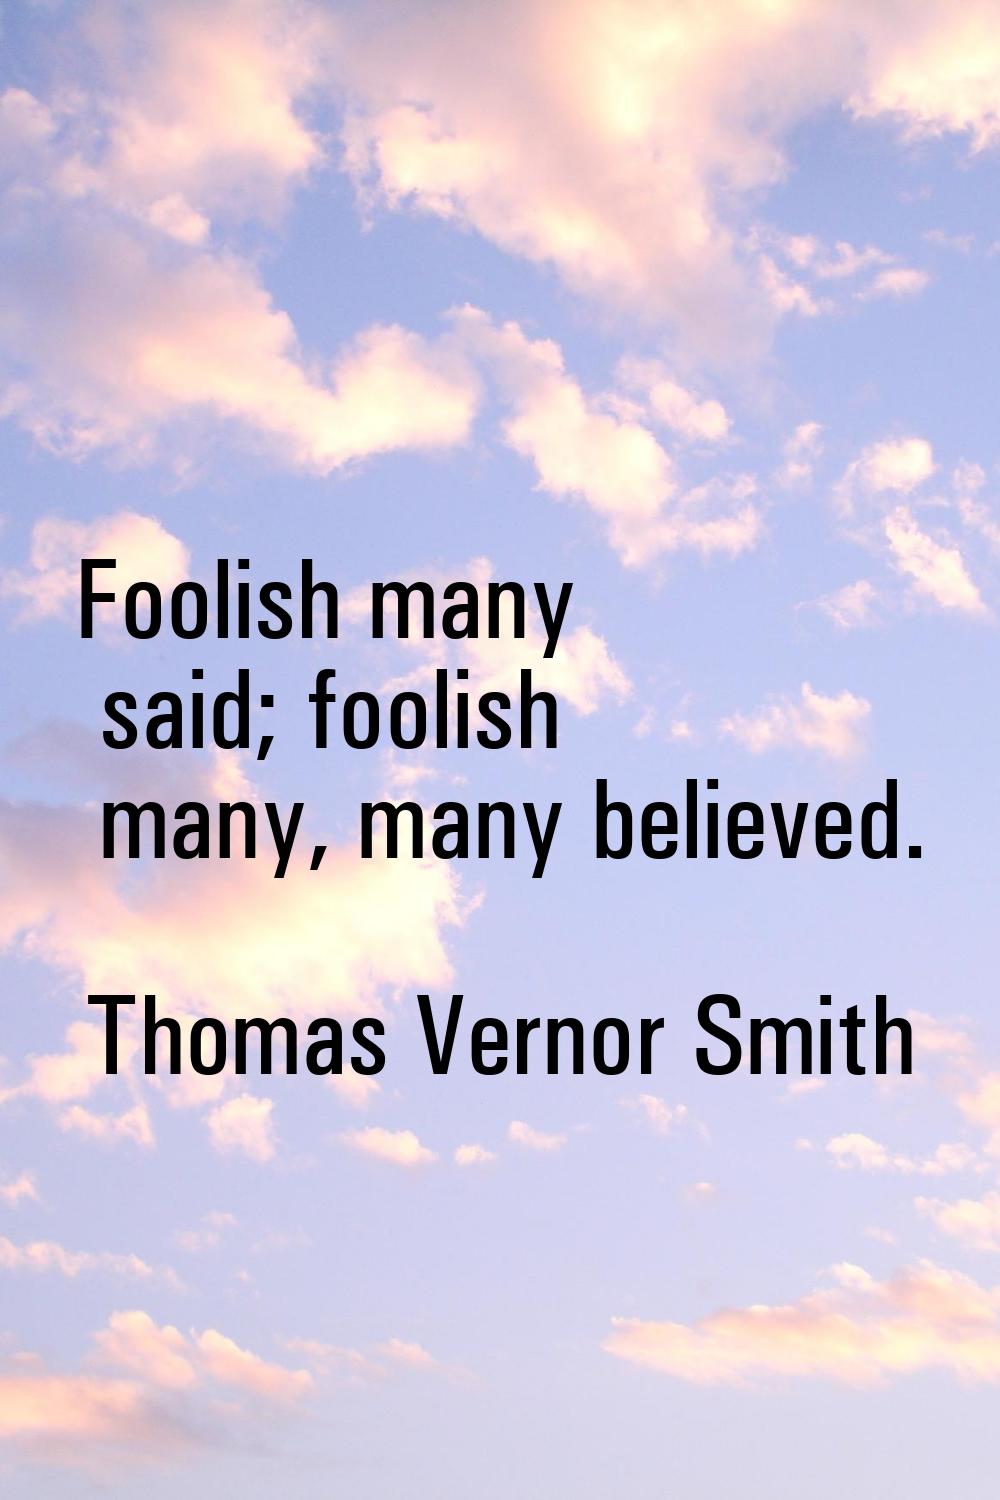 Foolish many said; foolish many, many believed.